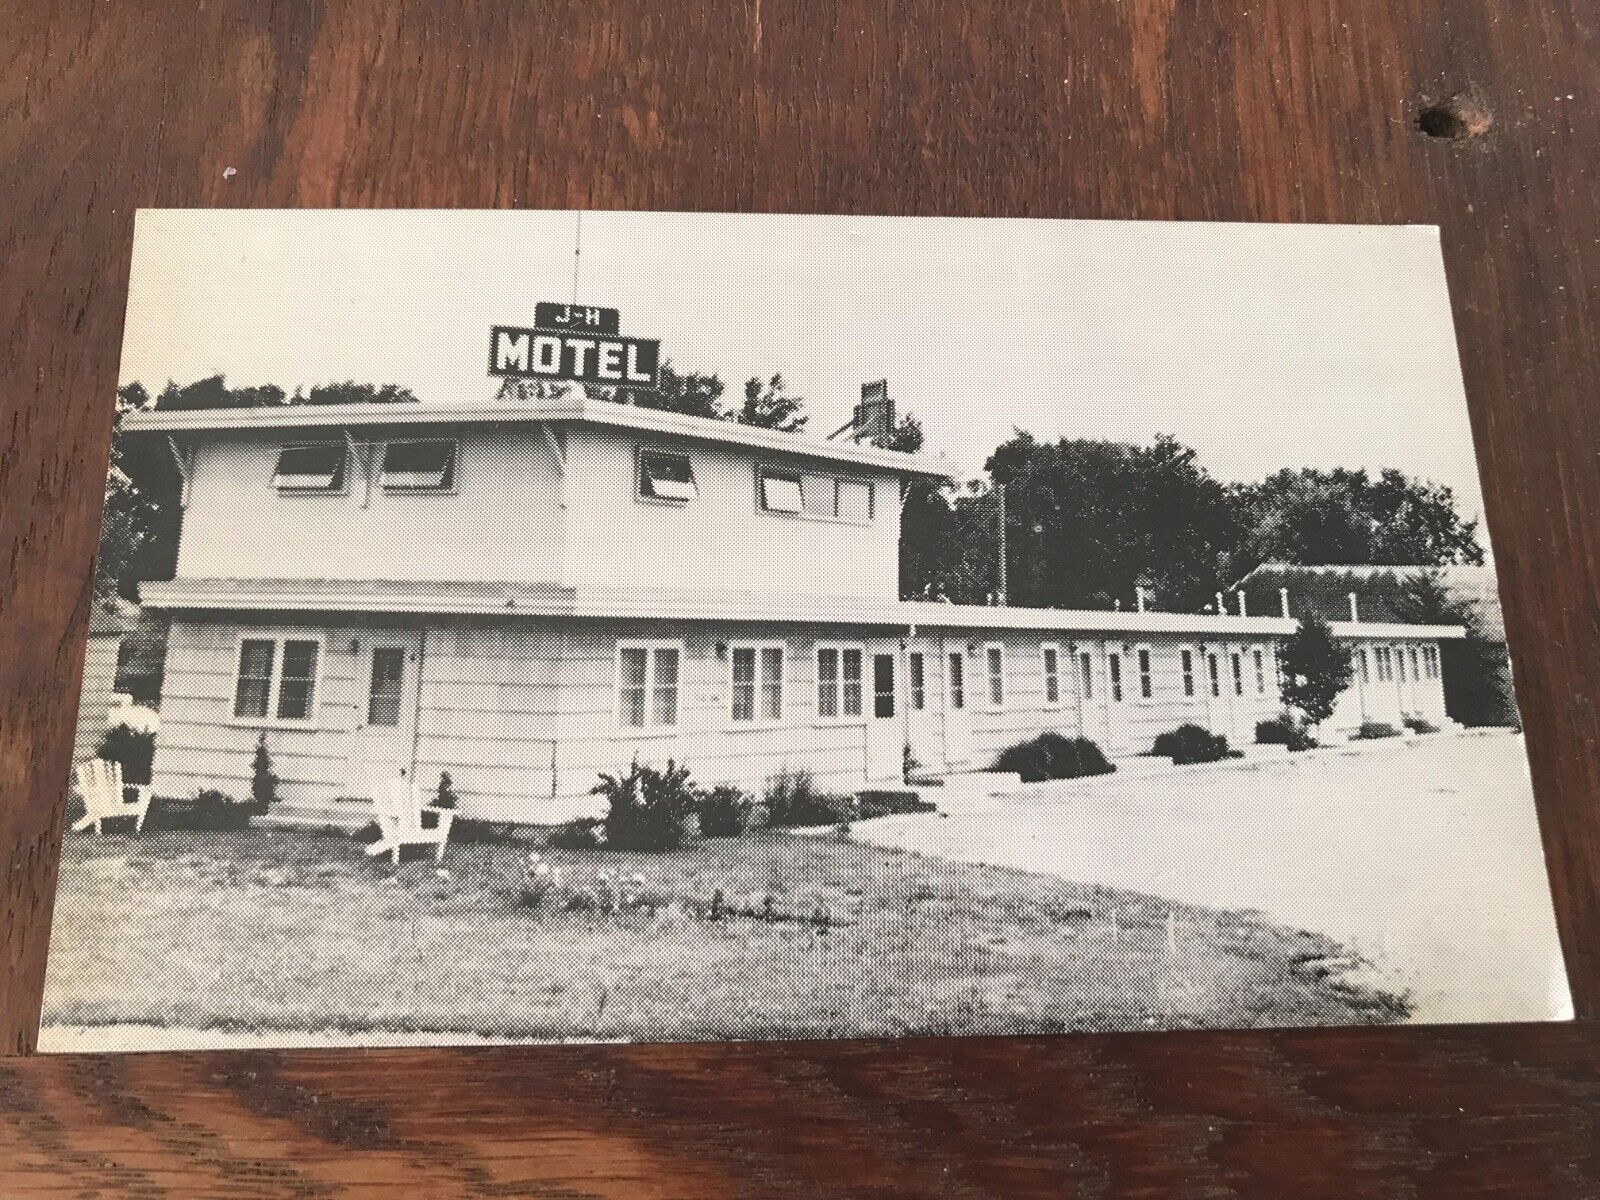 The J-H Motel Crookston Minnesota Postcard